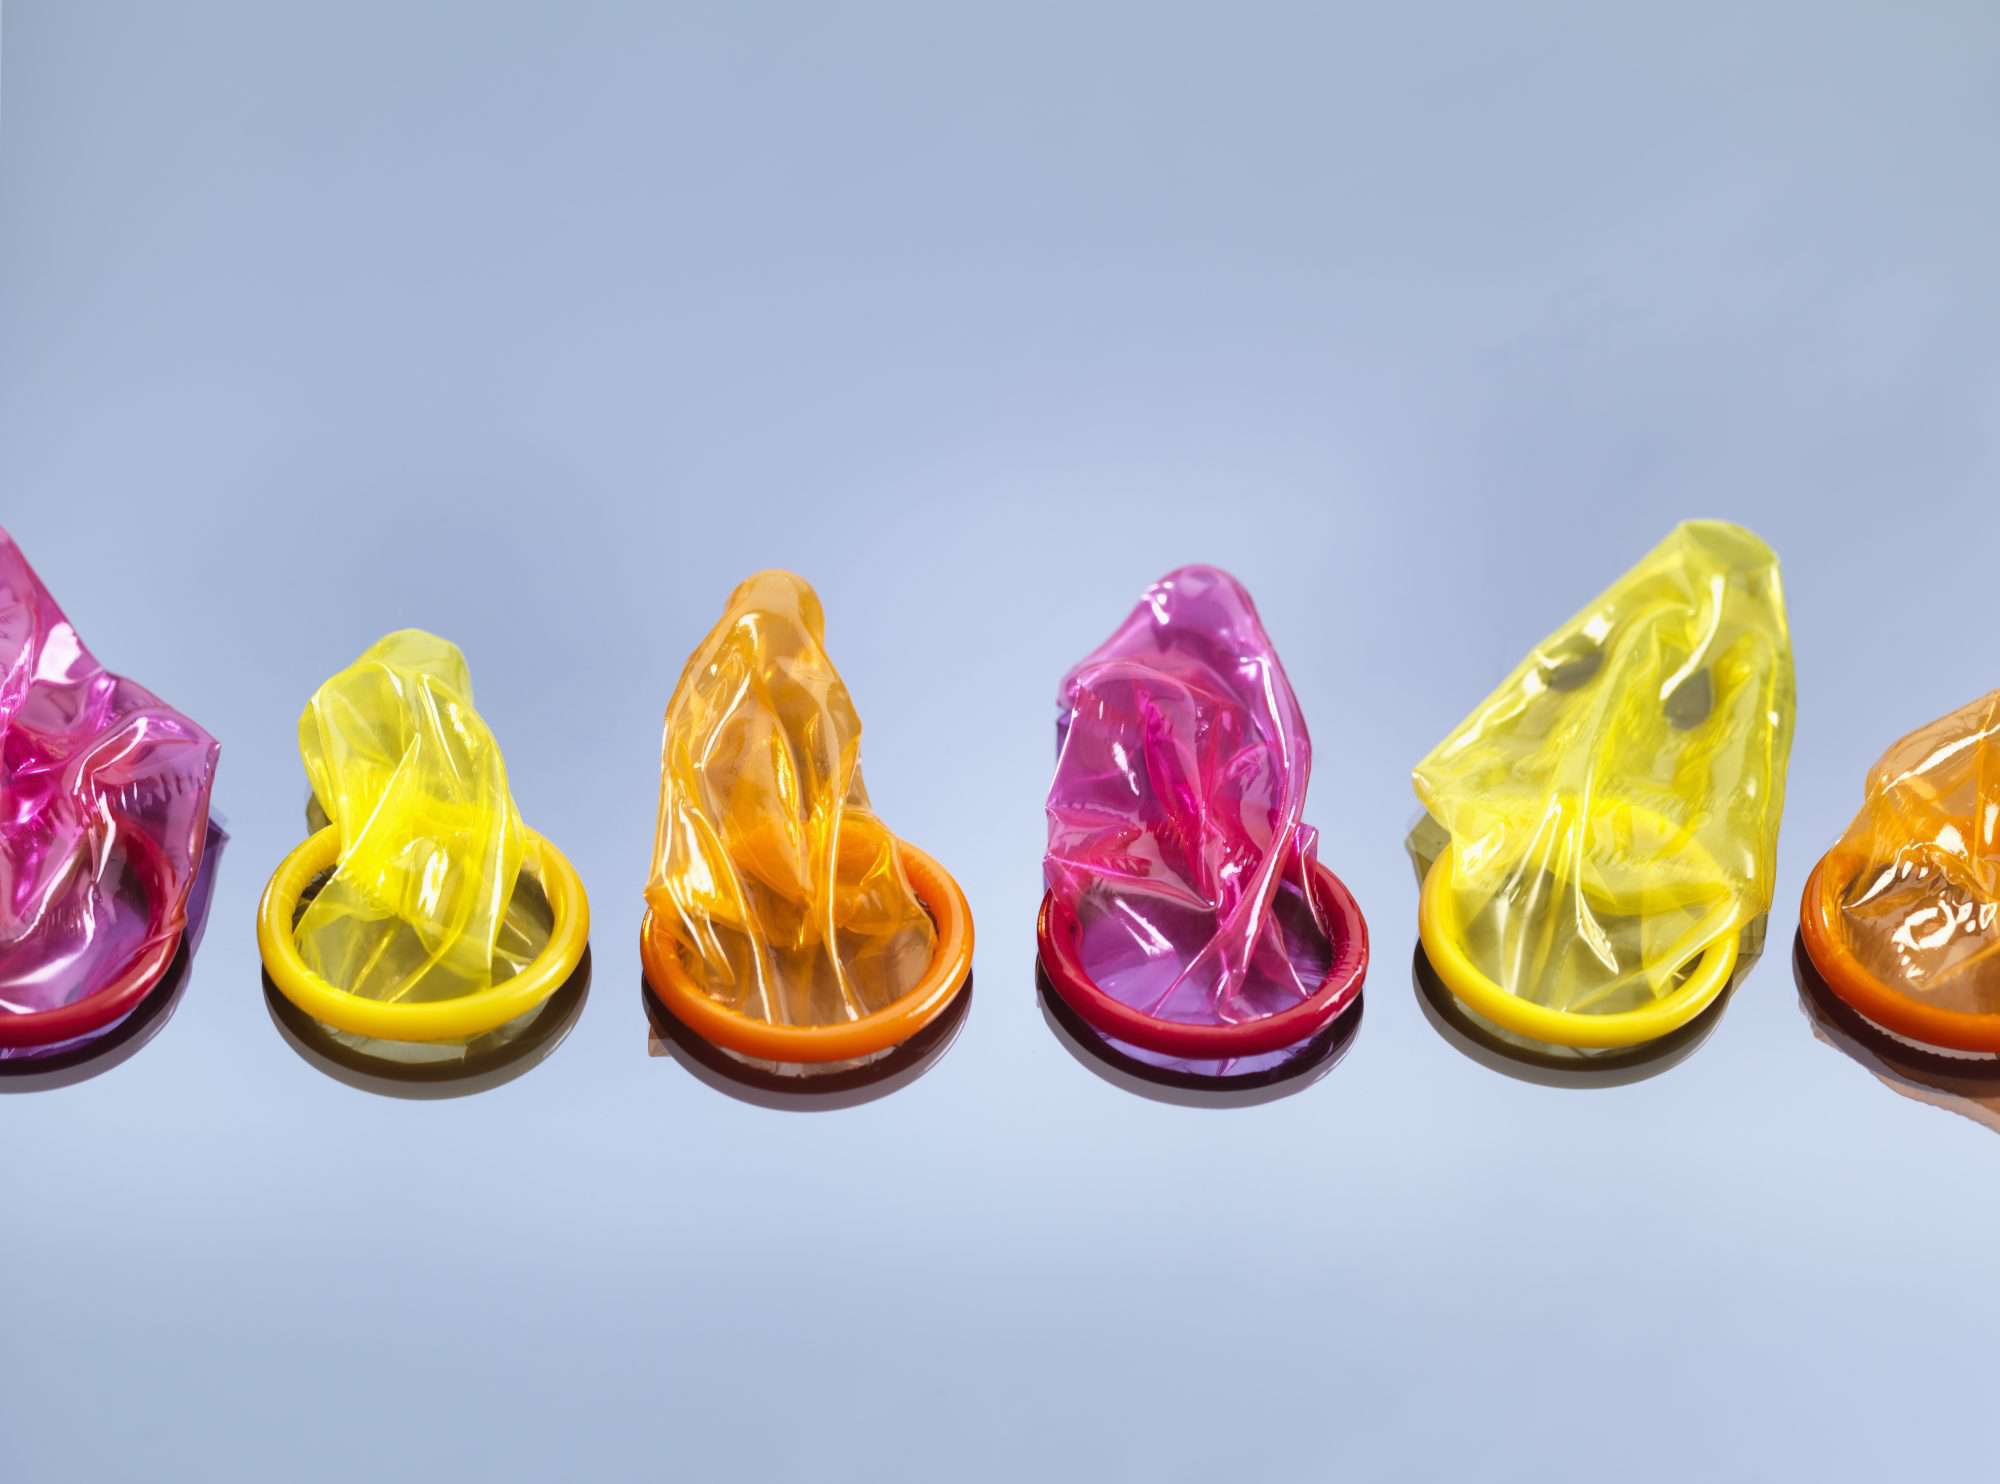 denny donovan share condom stuck in vagina photos